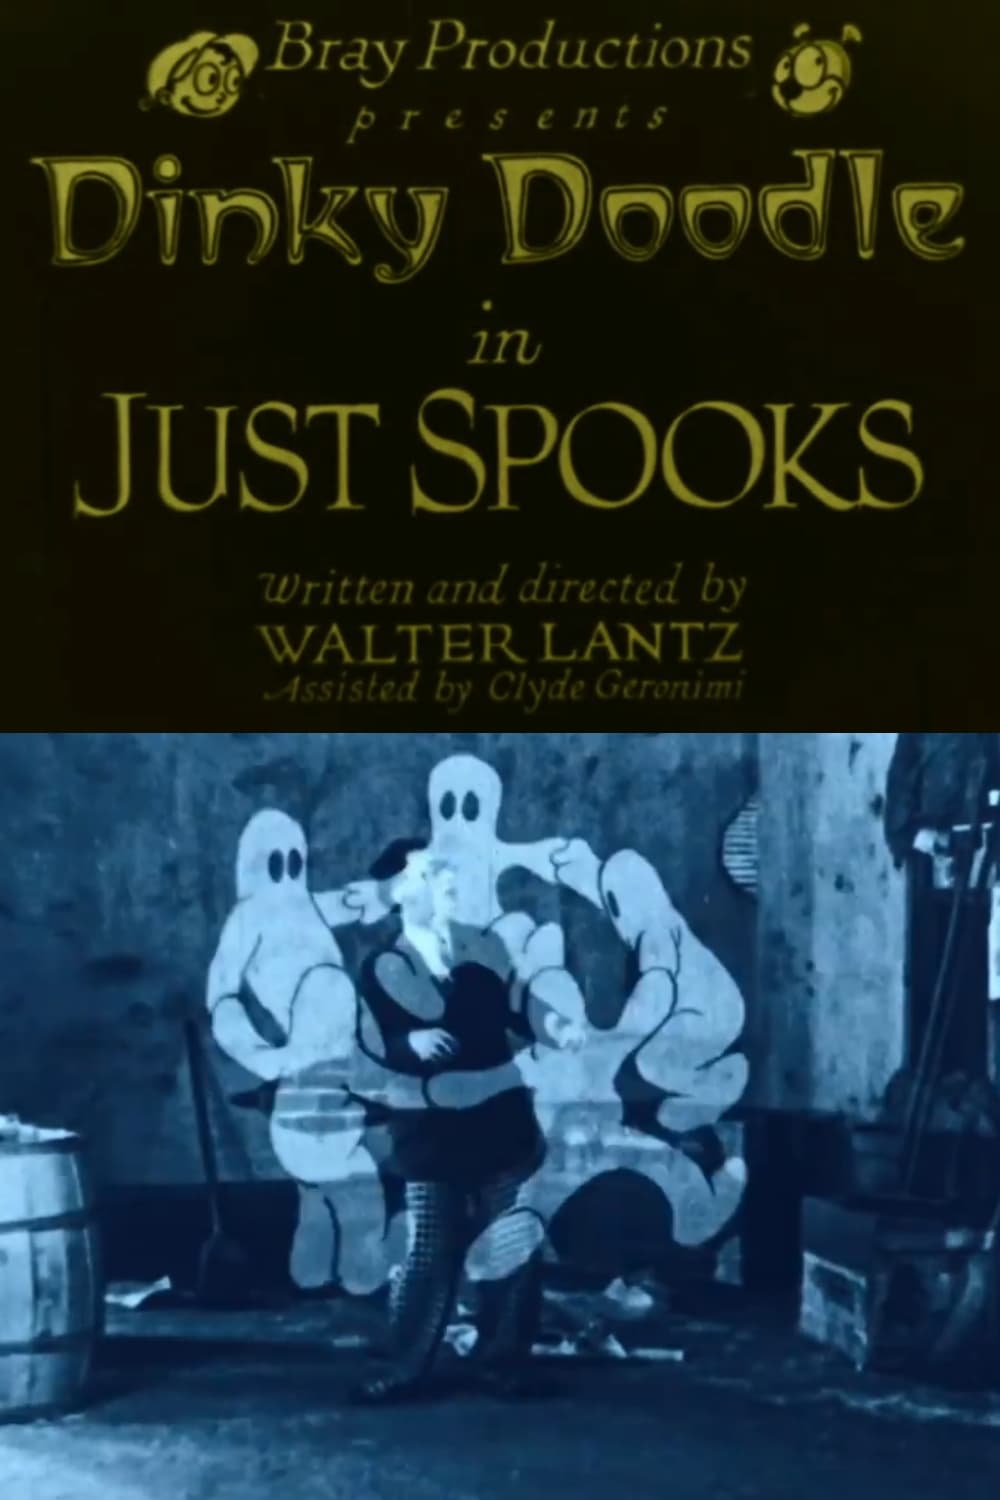 Just Spooks (1925)